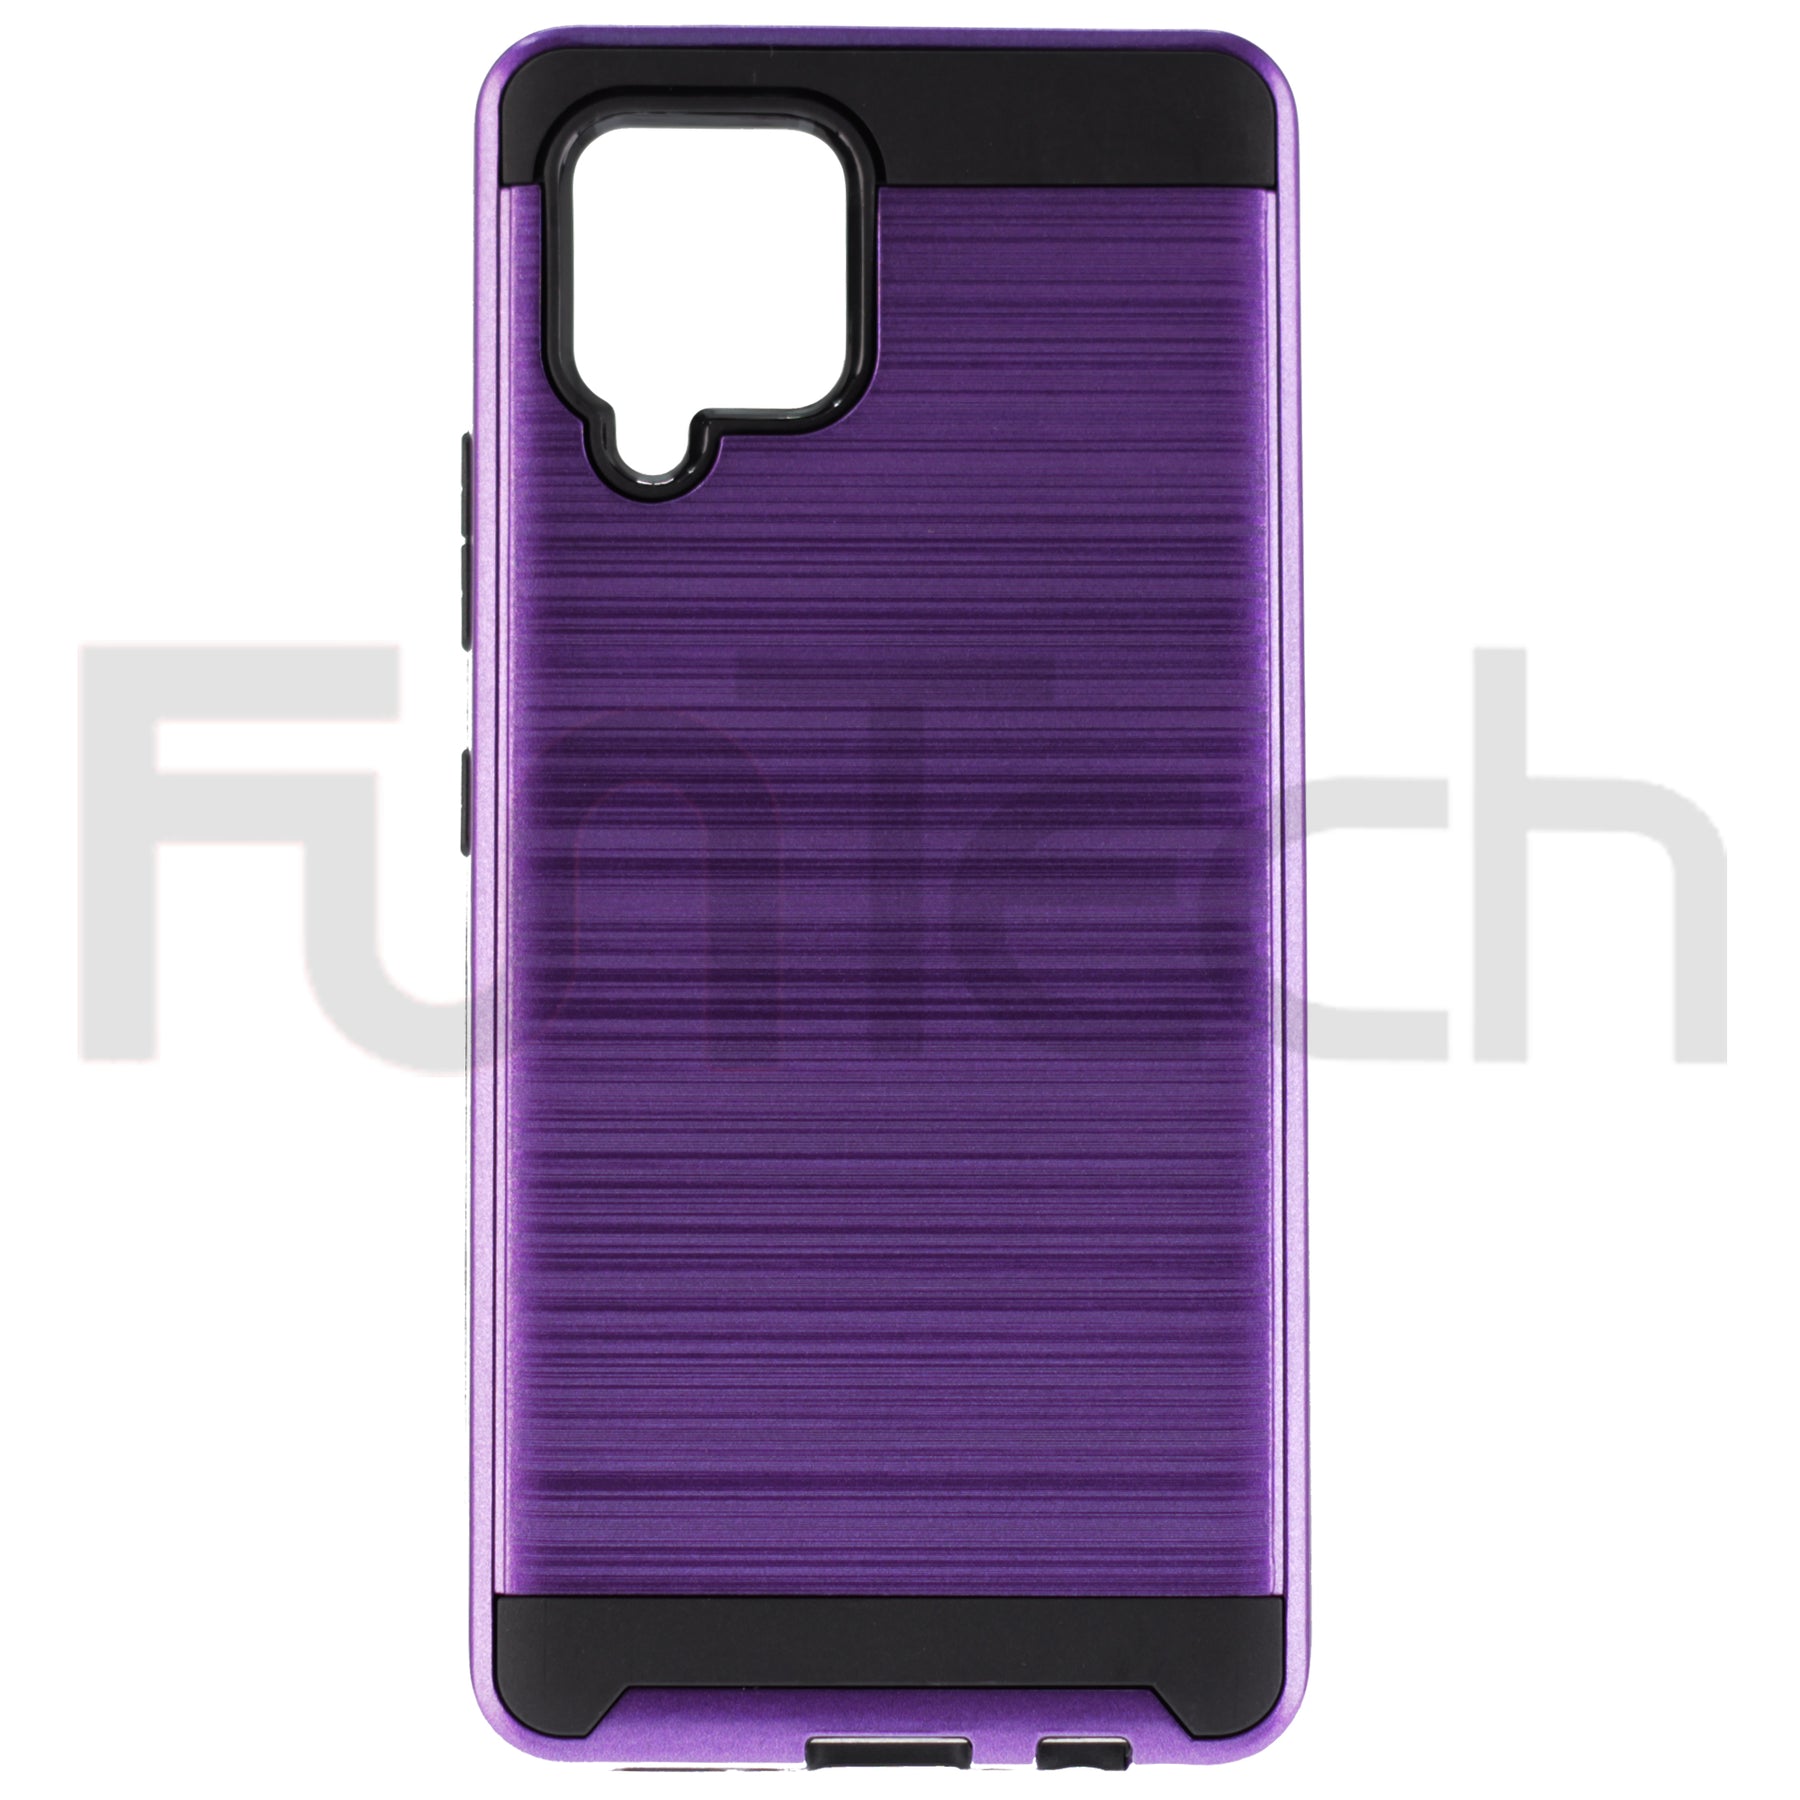 Samsung A42, Slim Armor Case, Color Purple.